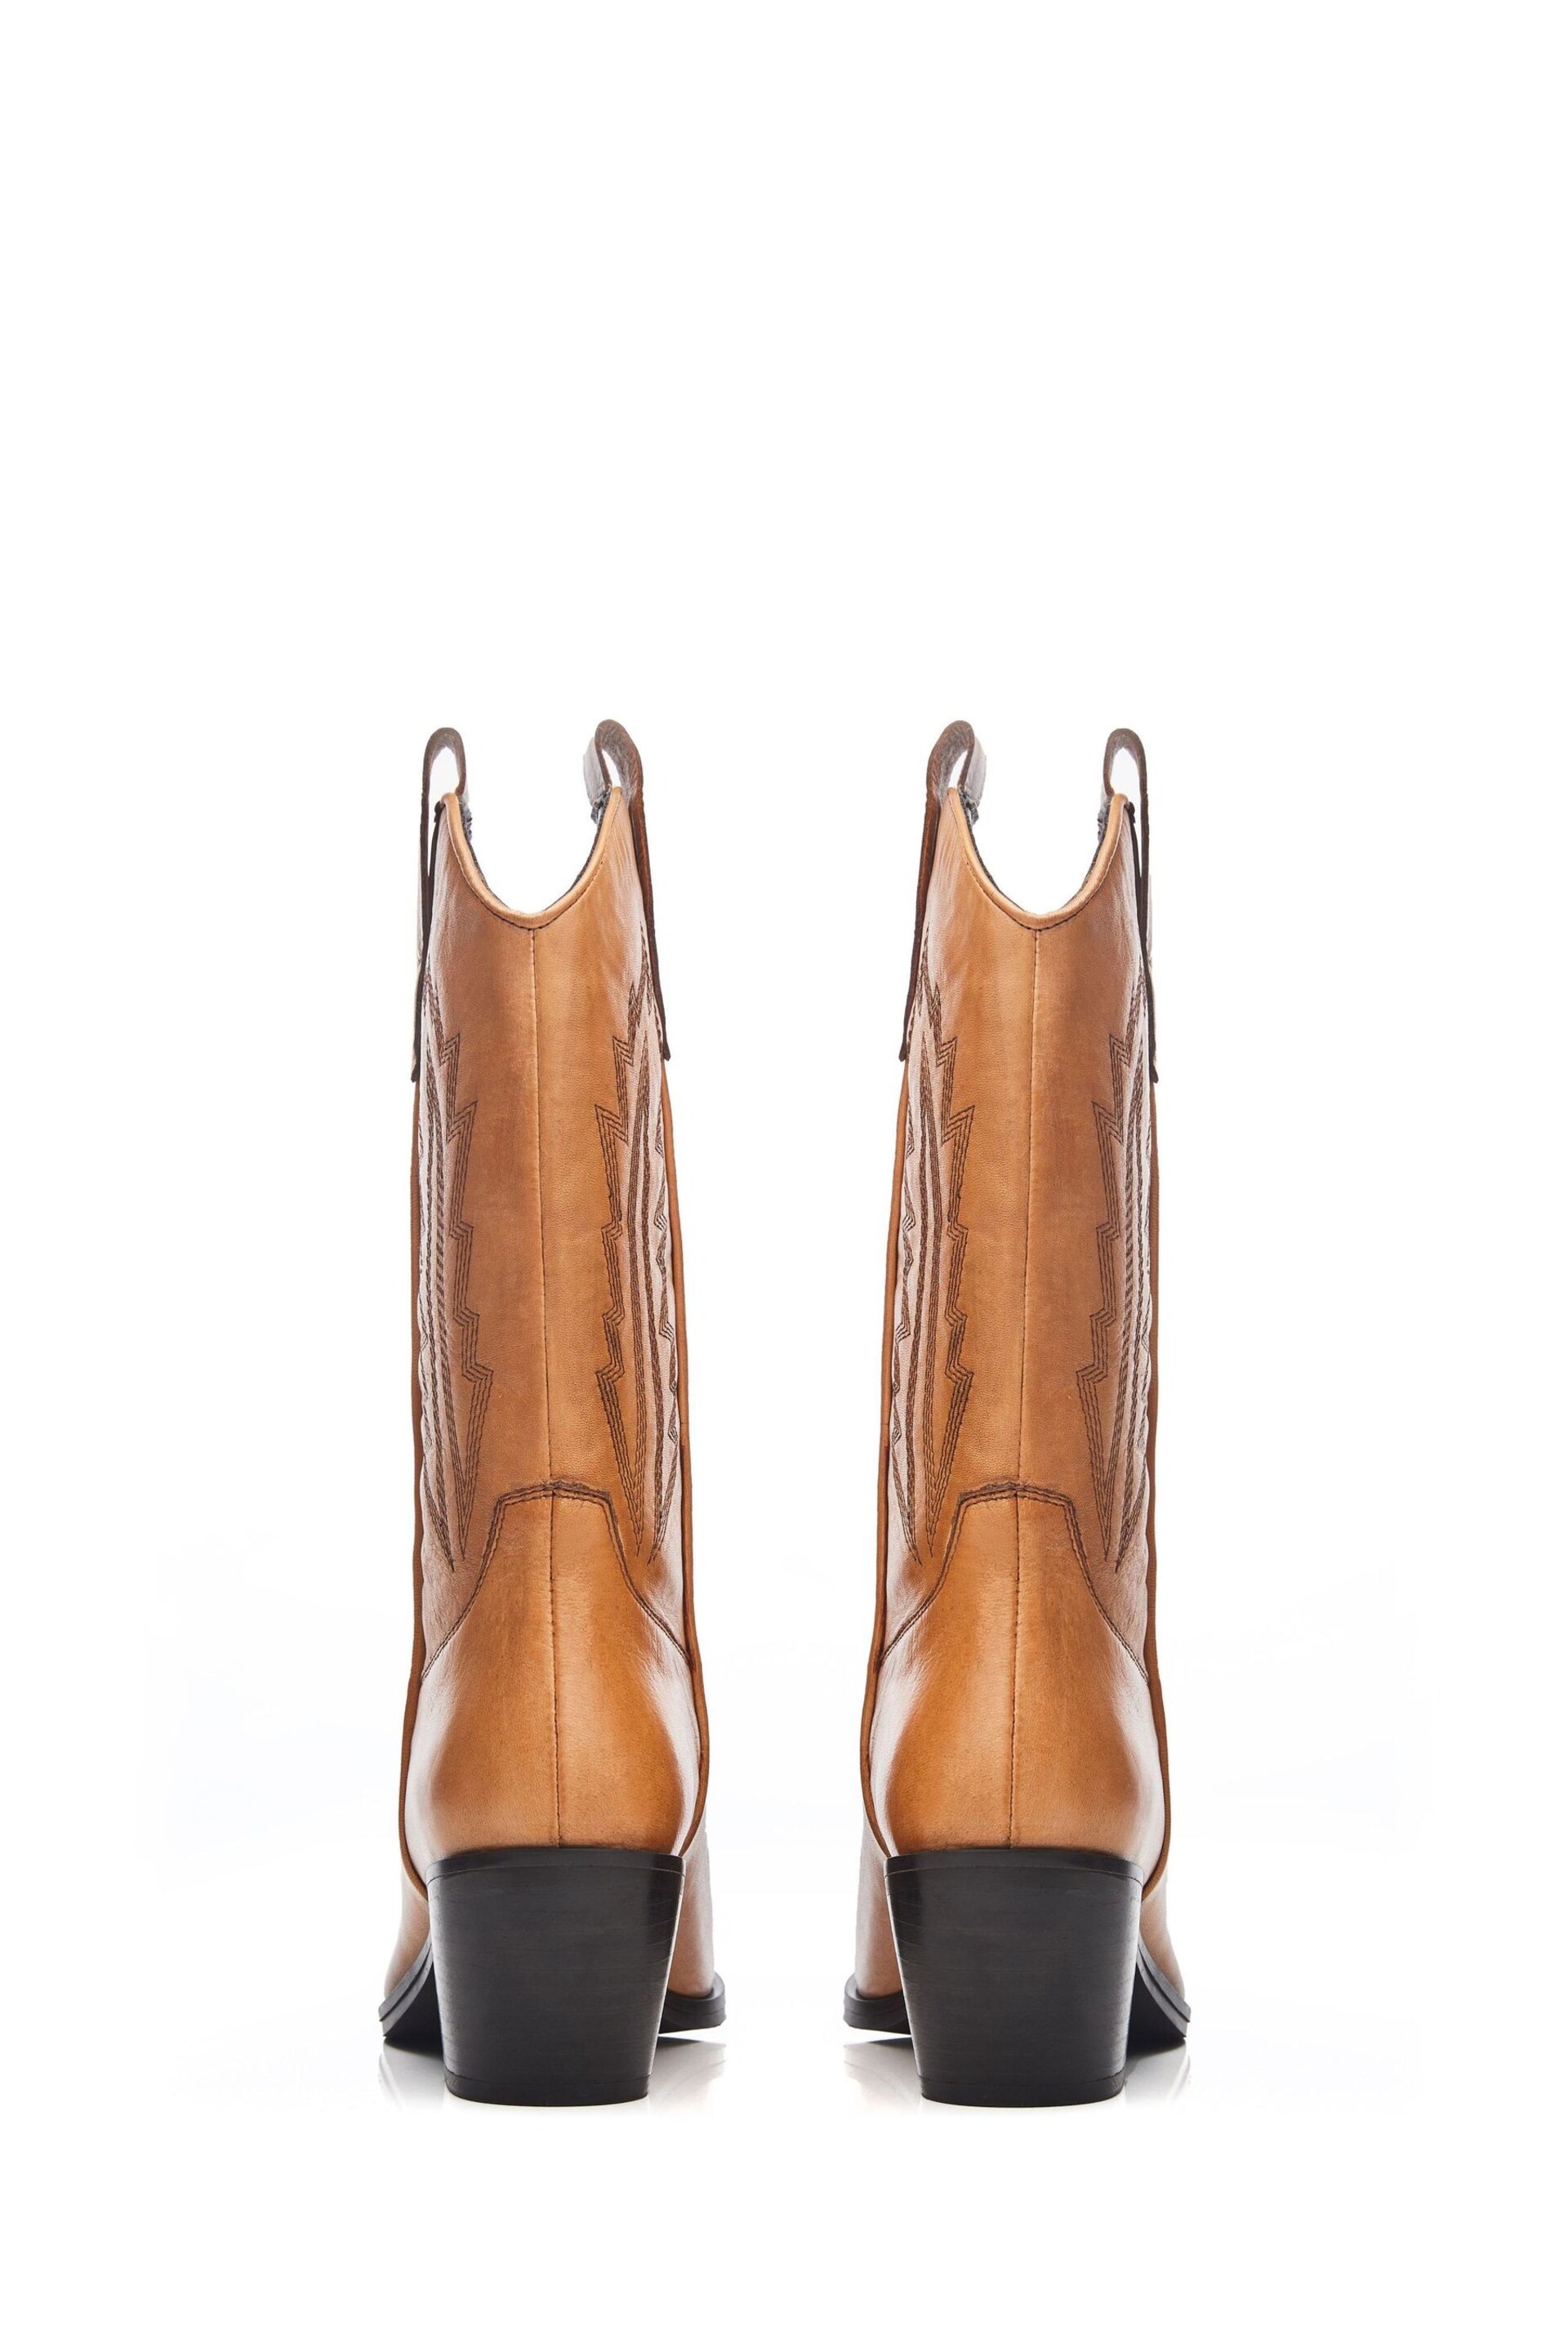 Moda in Pelle Heston Calf Height Western Black Boots - Image 3 of 4